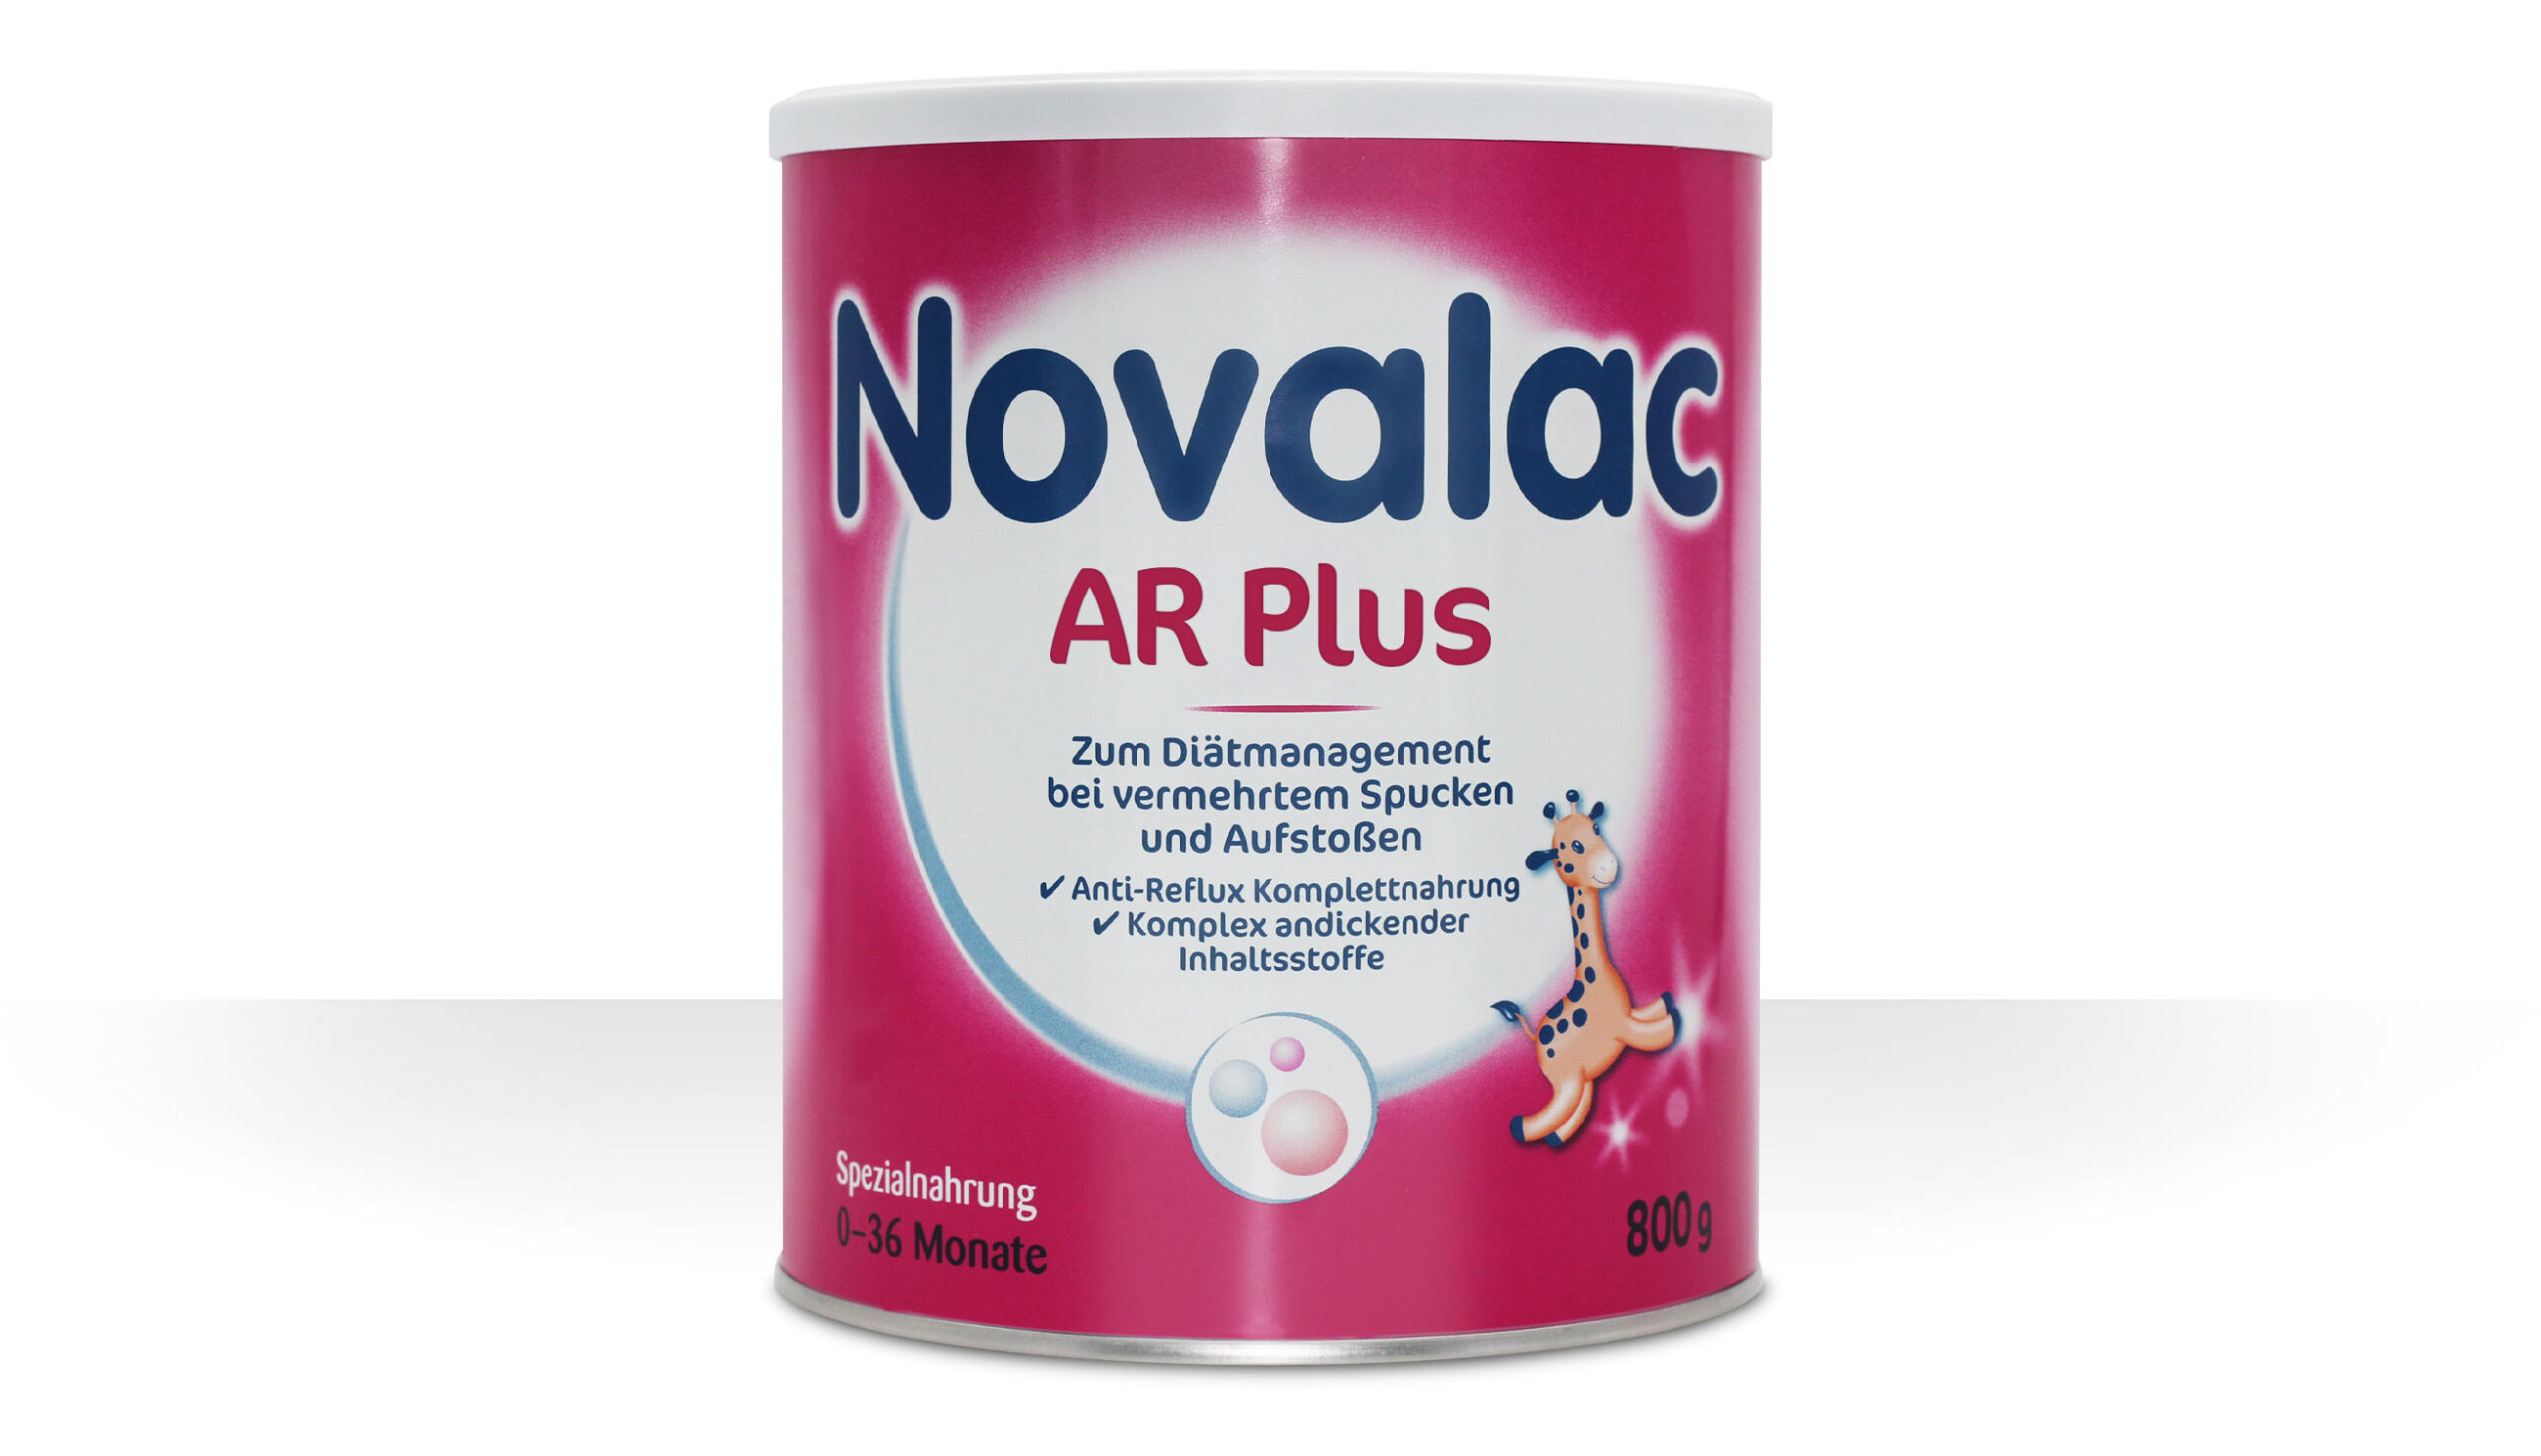 Novalac AR Plus